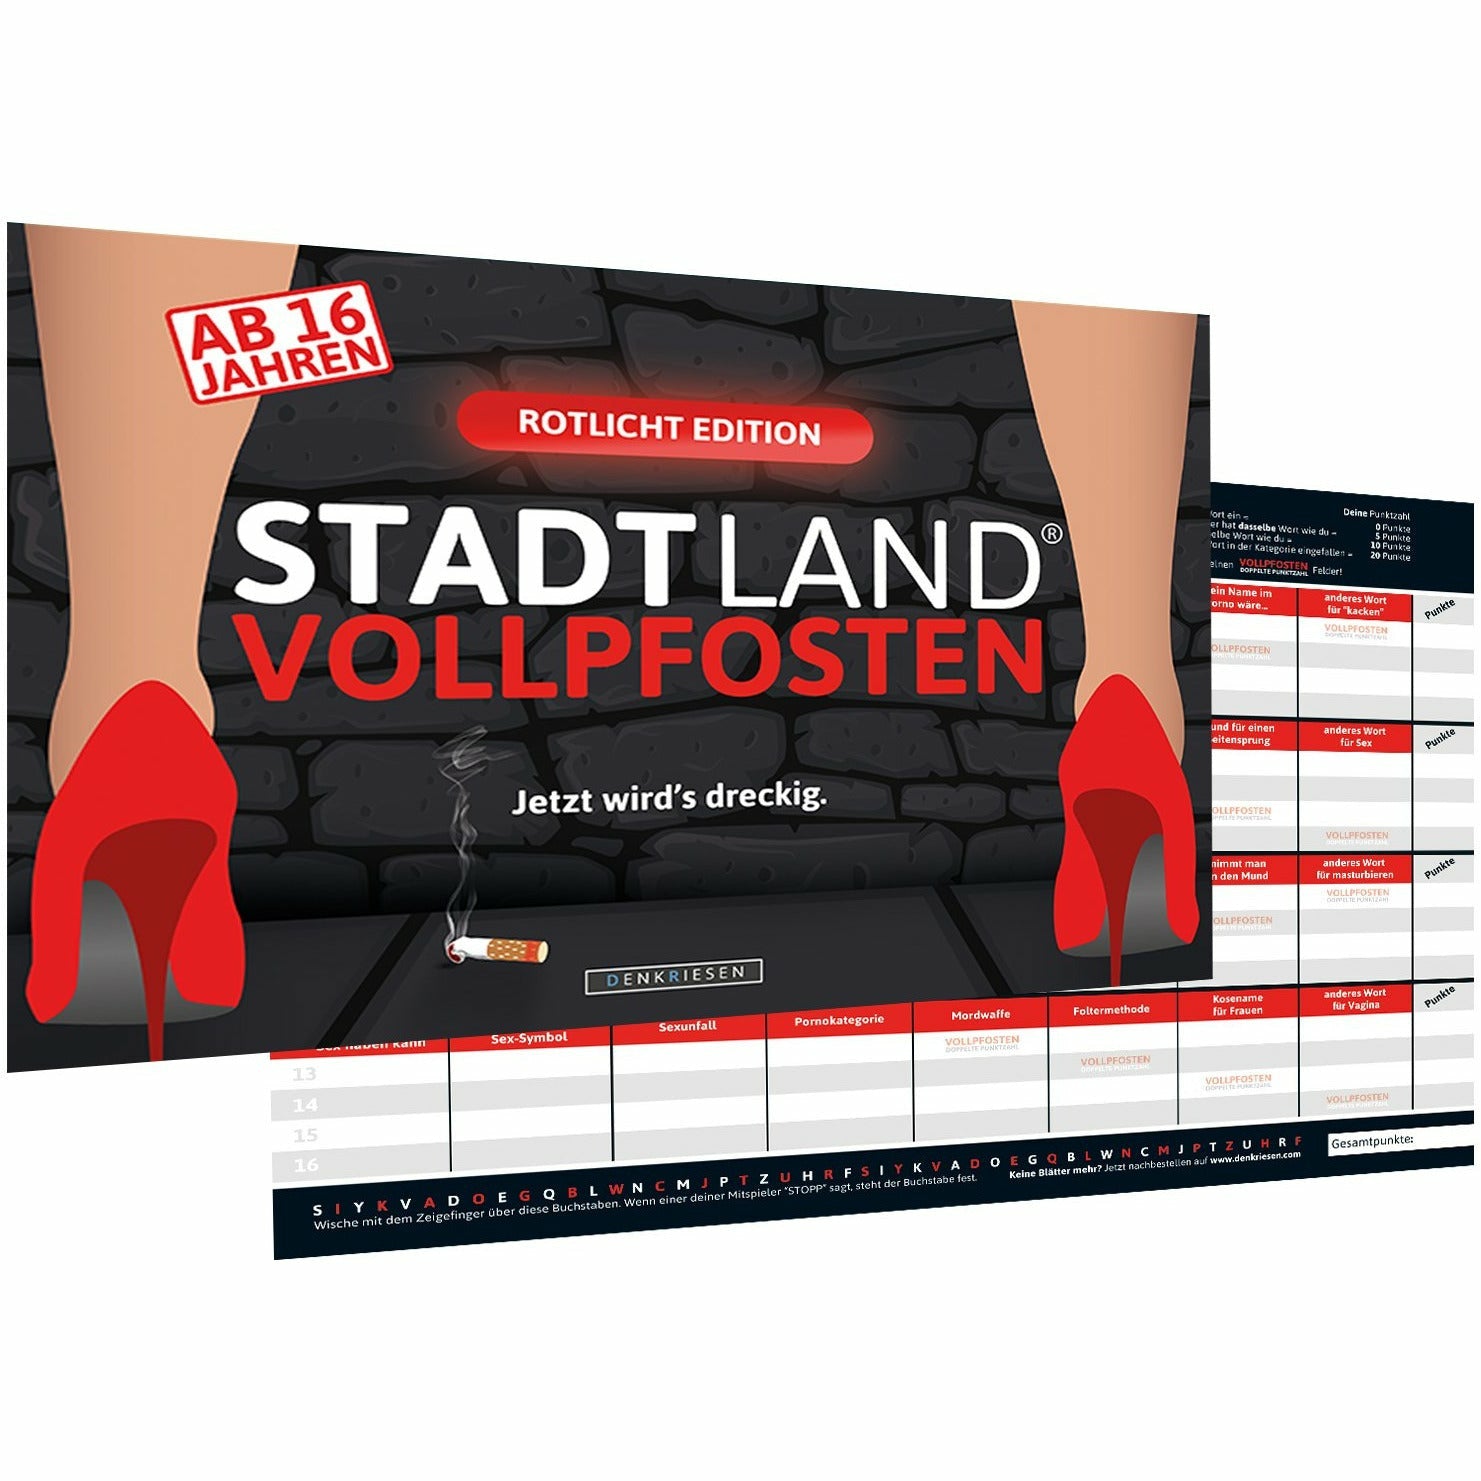 StadtLandVollpfosten - Rotlicht Edition